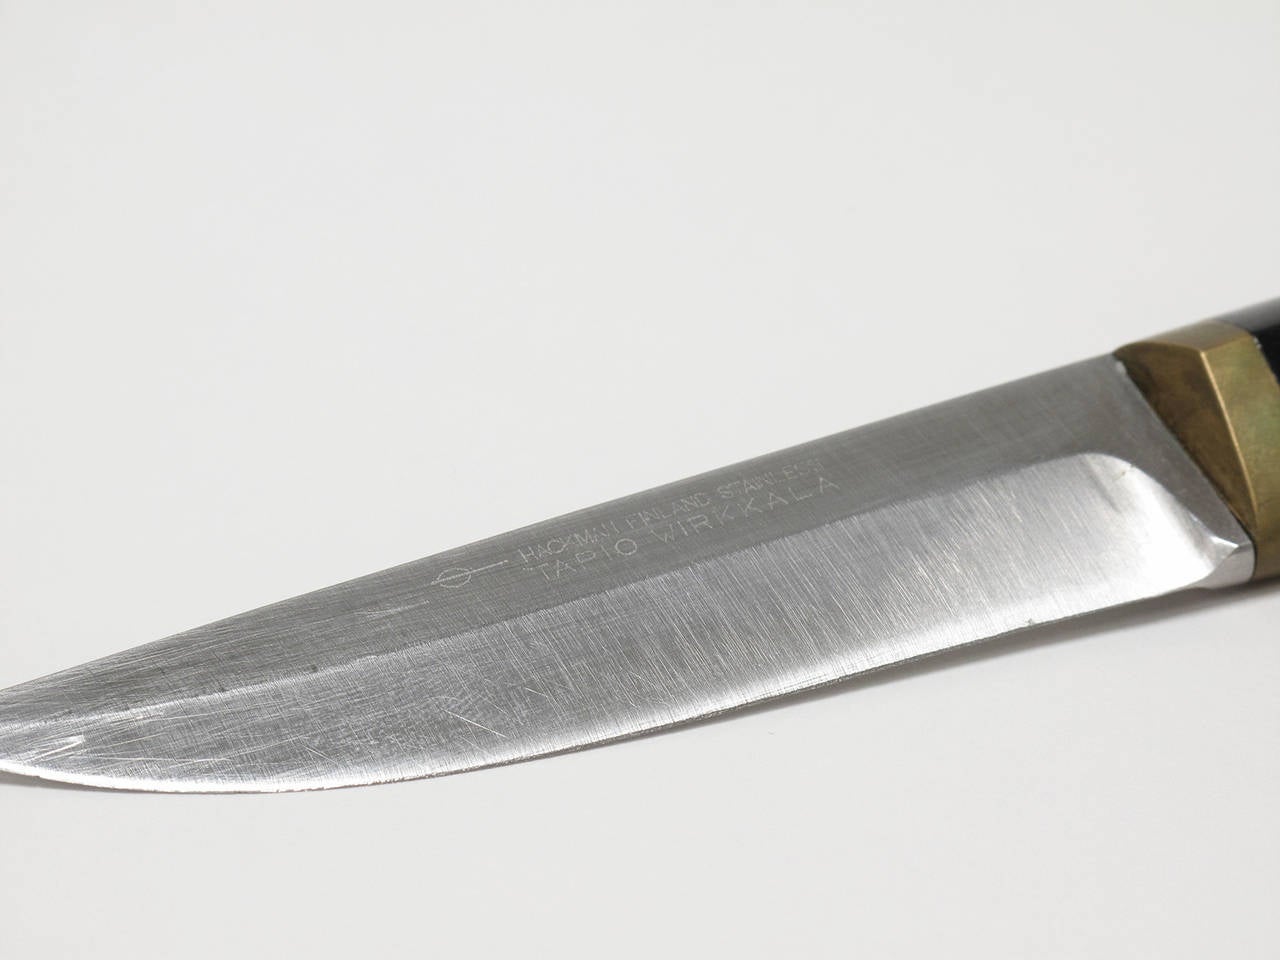 Puukko Knife and Leather Sheath by Tapio Wirkkala at 1stdibs